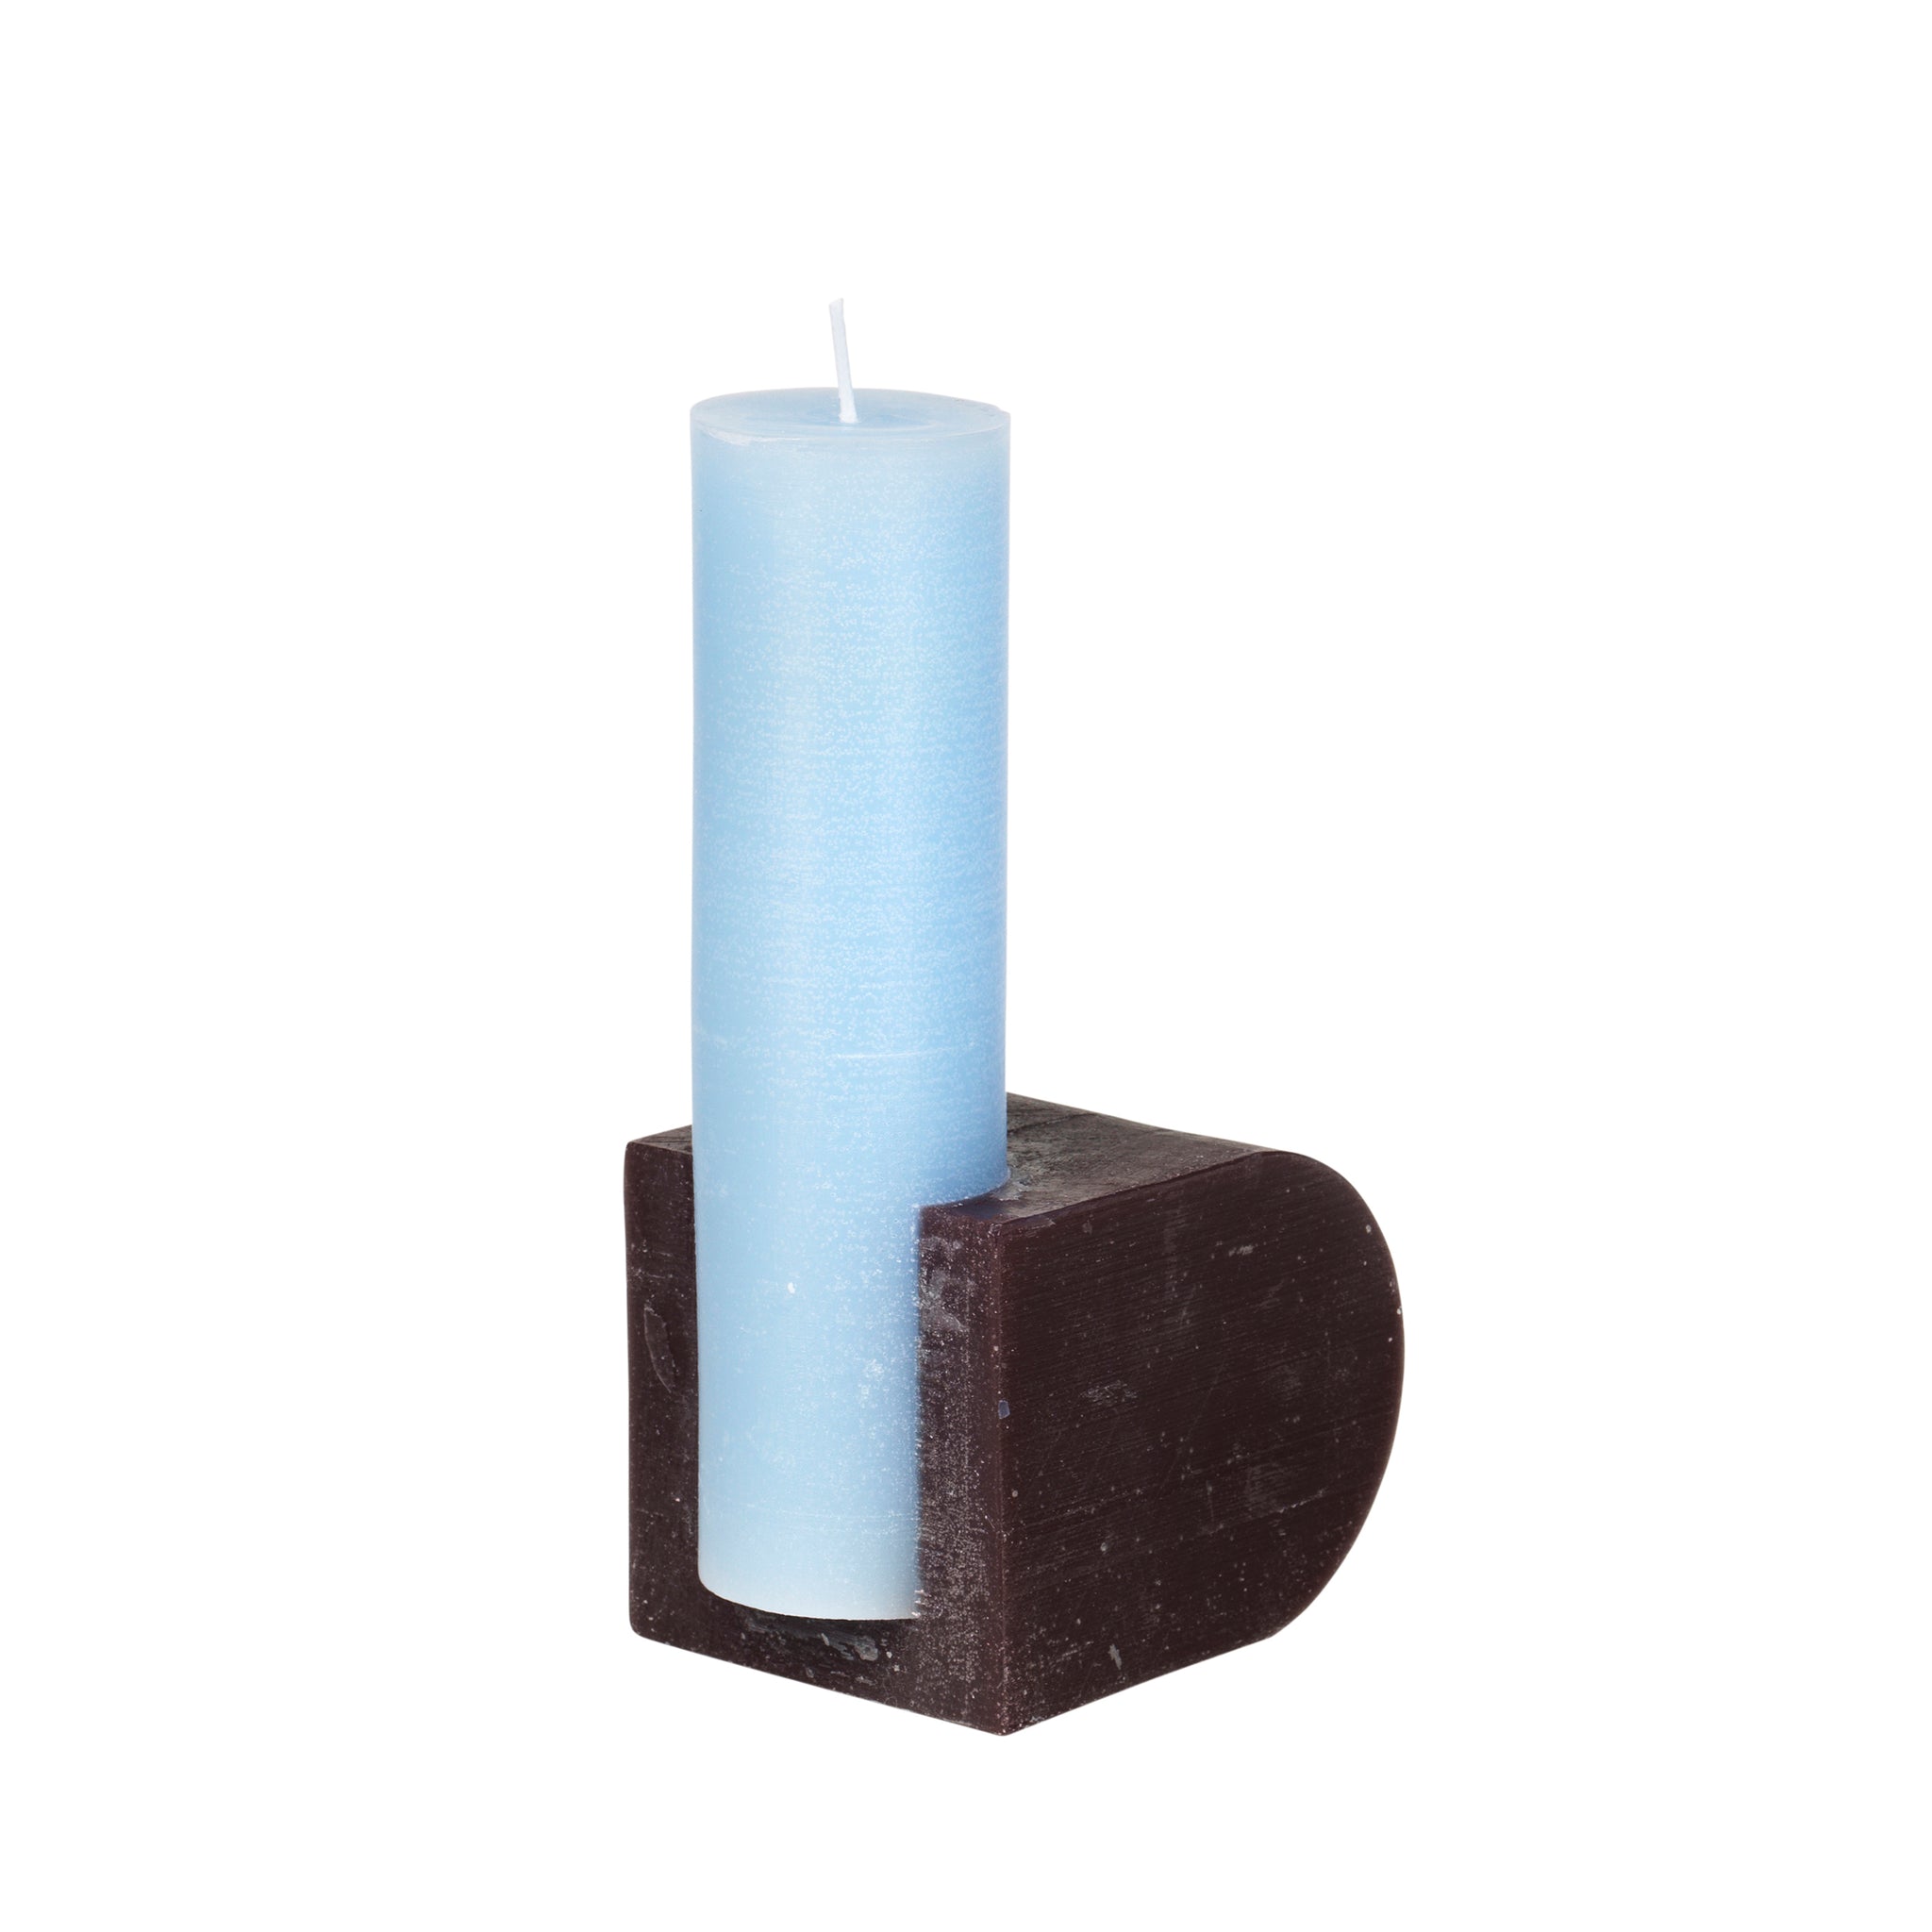 Blocke Candle - Light Blue / Brown Broste